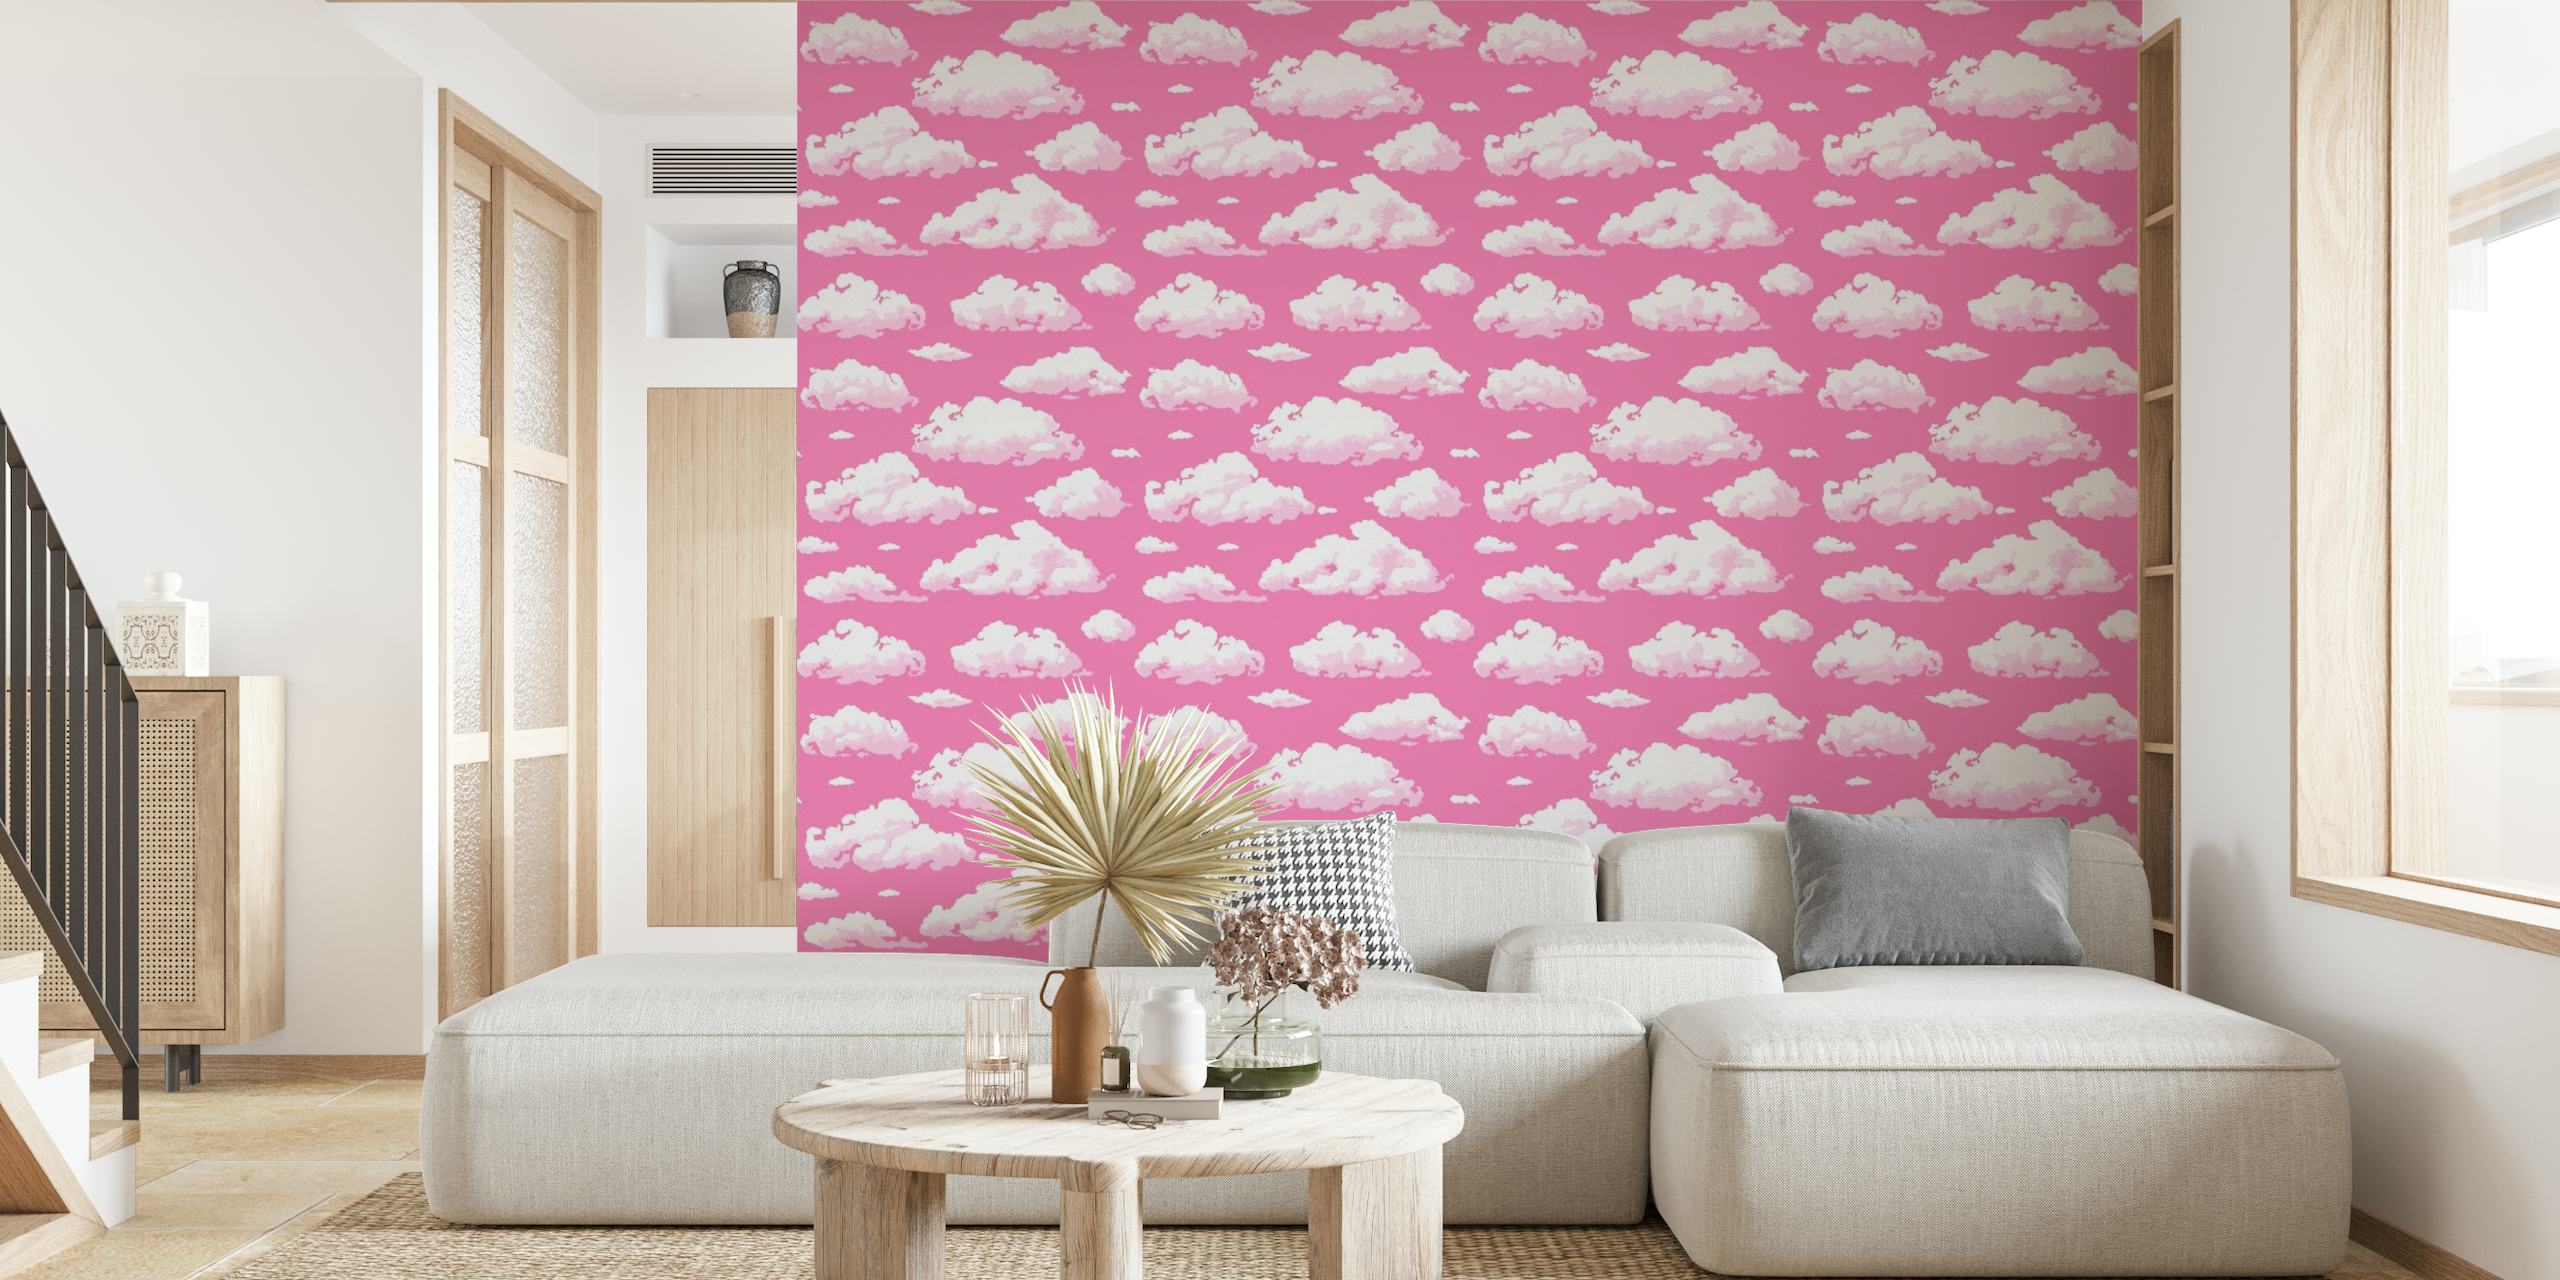 Cloudy sky on pink papiers peint